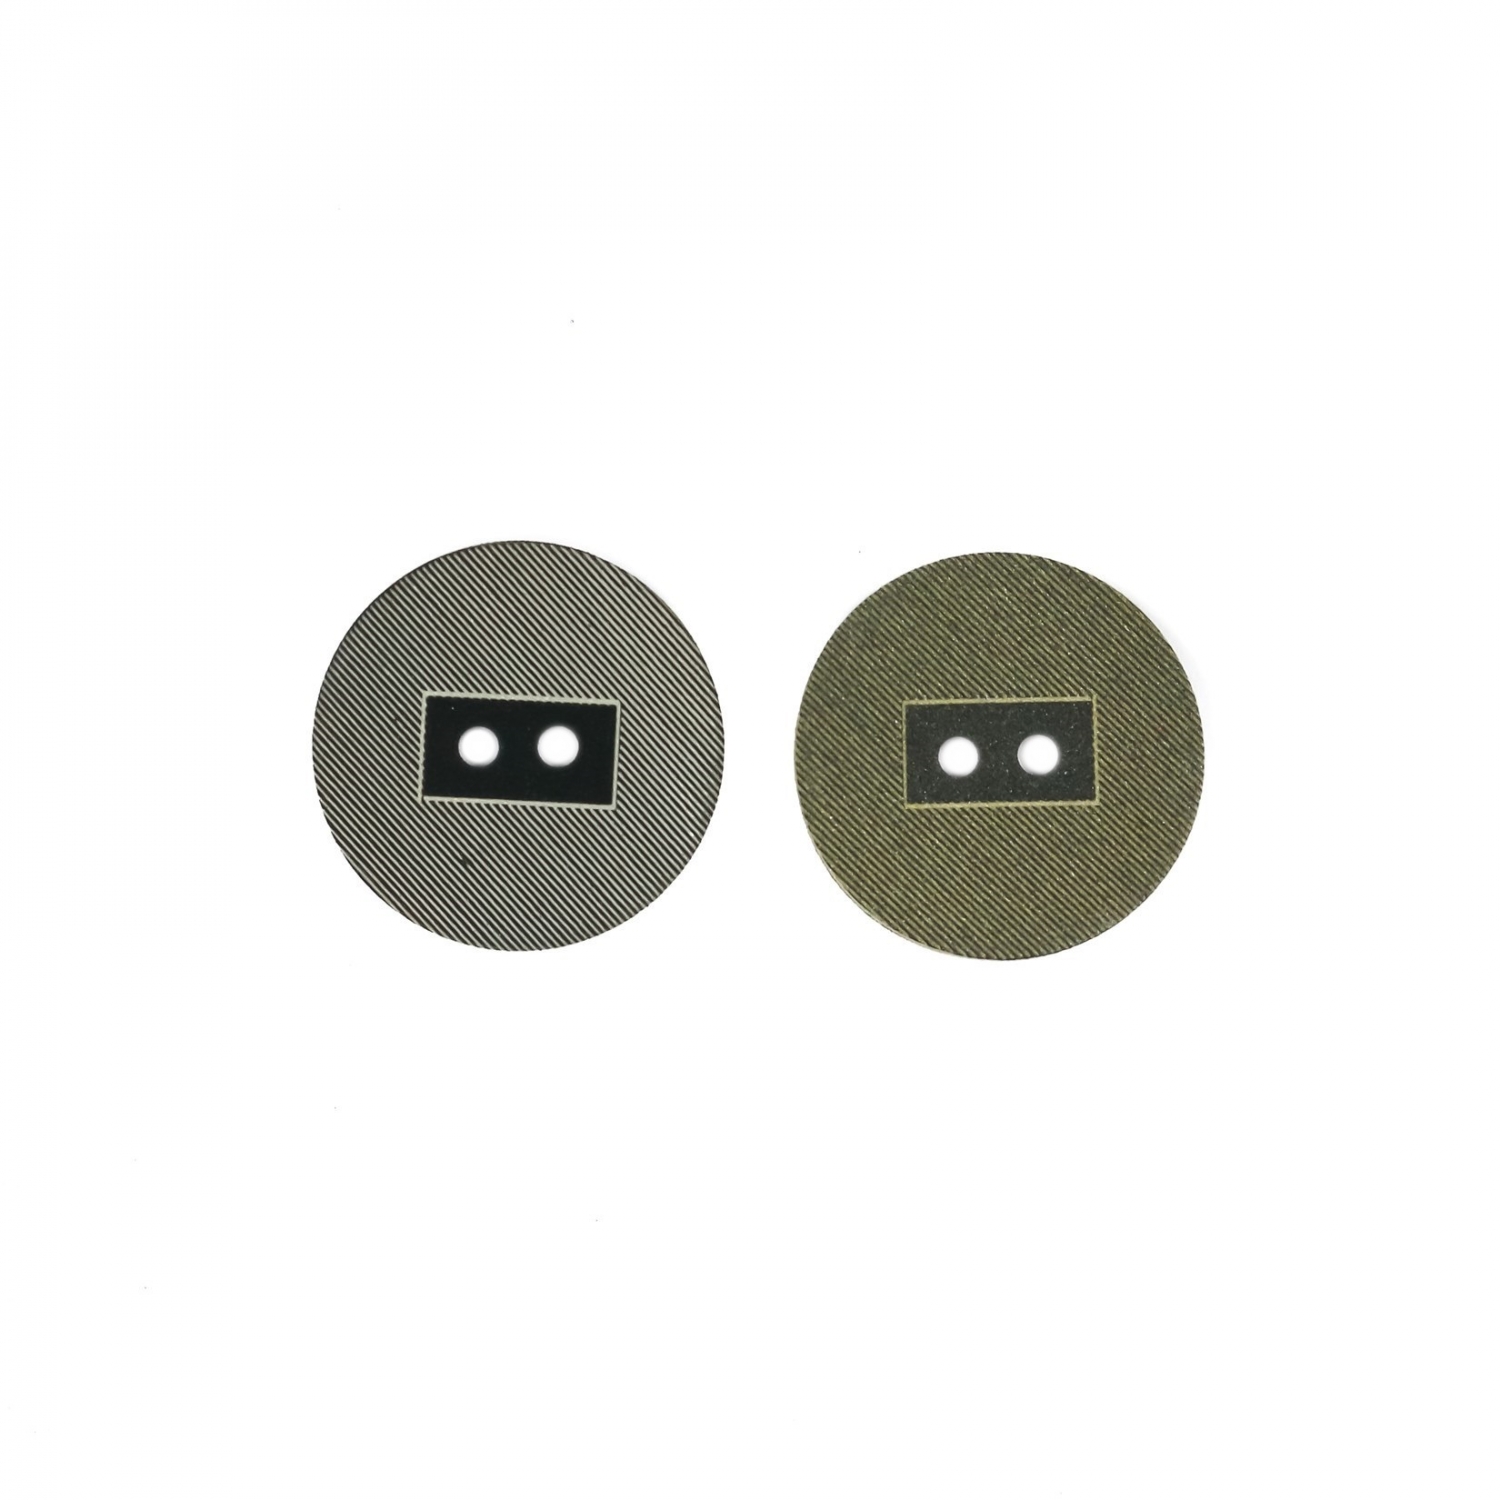 2 Holes Plastic Buttons, 15 mm (50 pcs/pack) Code: 11923